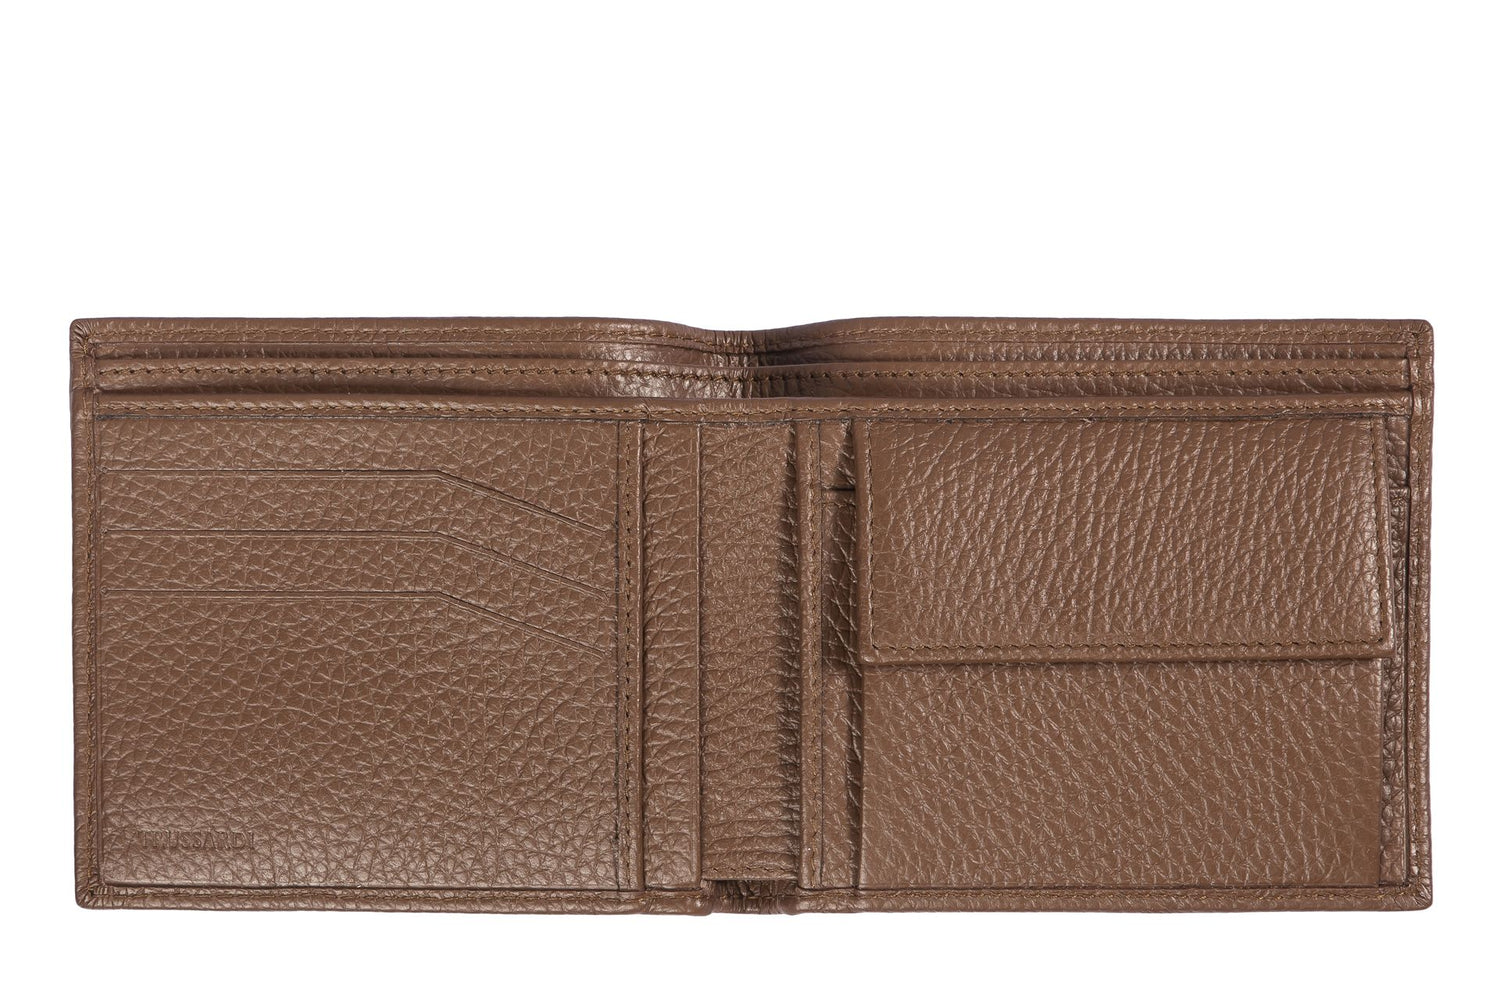 Trussardi Brown Leather Wallet - DEA STILOSA MILANO